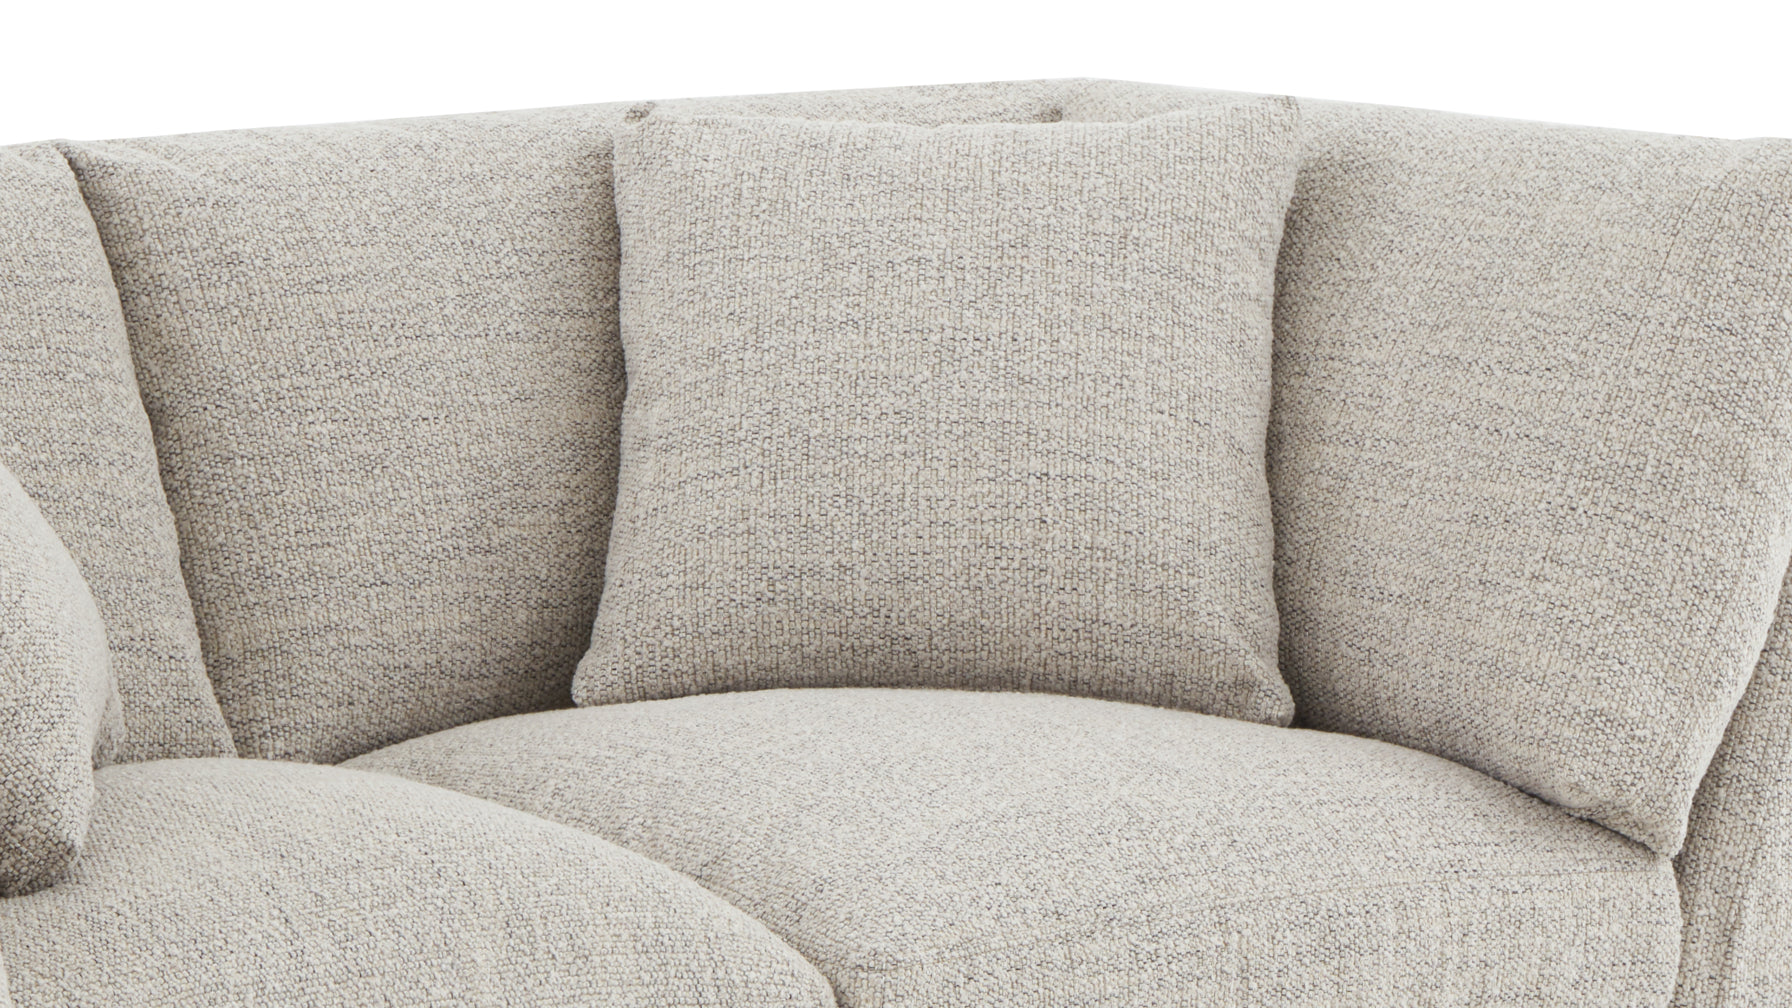 Get Together™ 2-Piece Modular Sofa, Standard, Oatmeal - Image 9